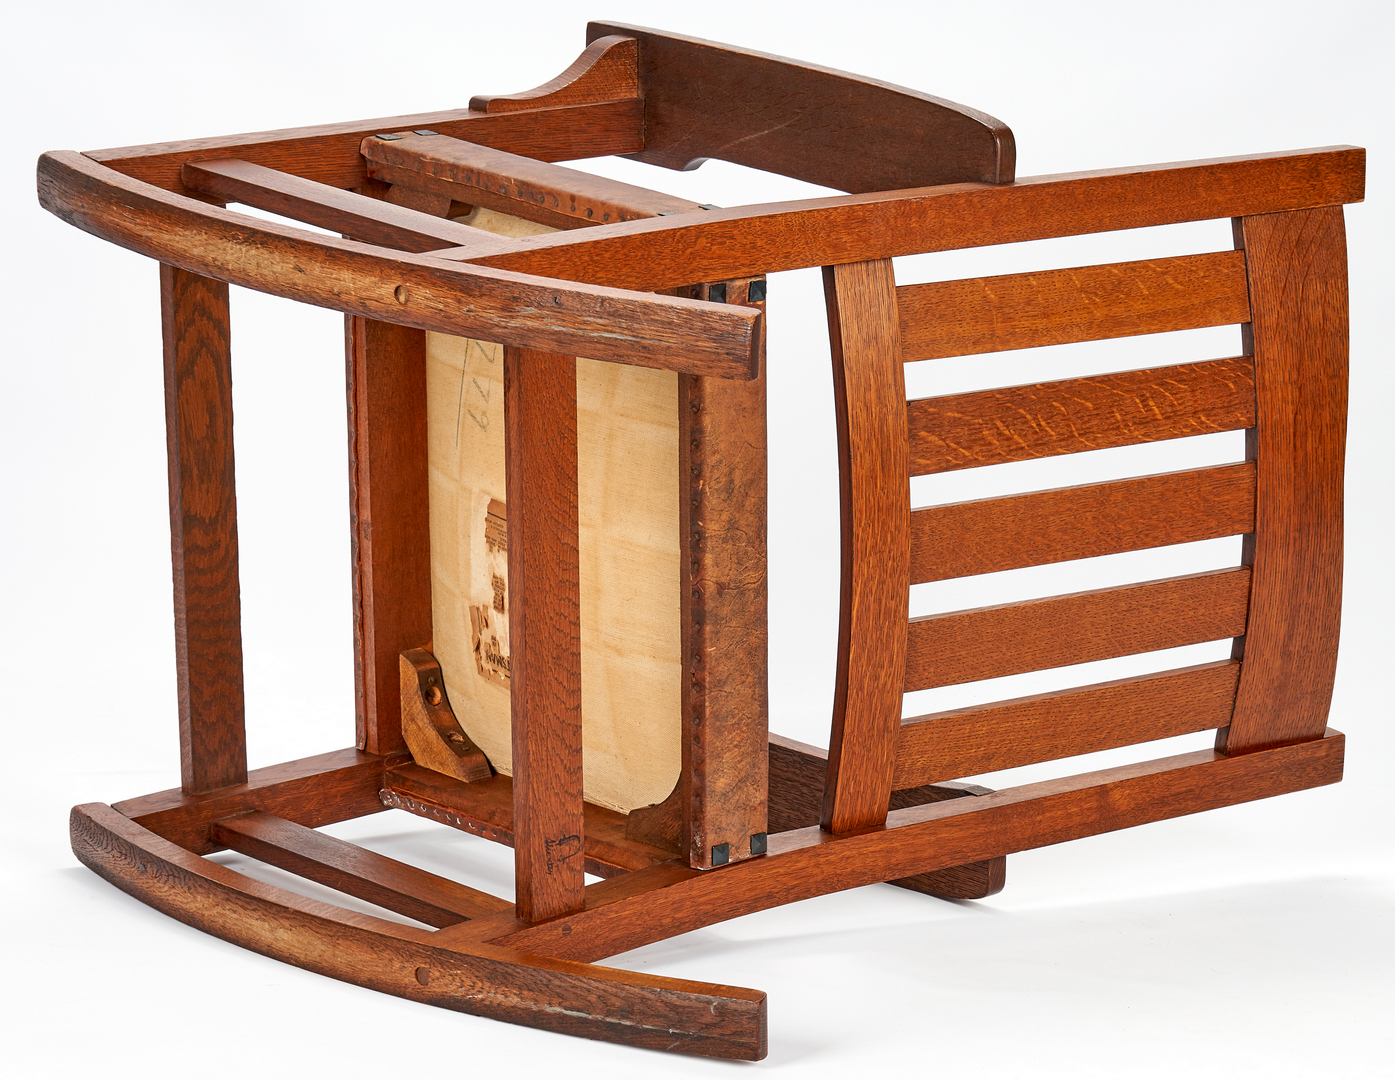 Lot 507: Gustav Stickley Arts & Crafts Oak Rocking Chair